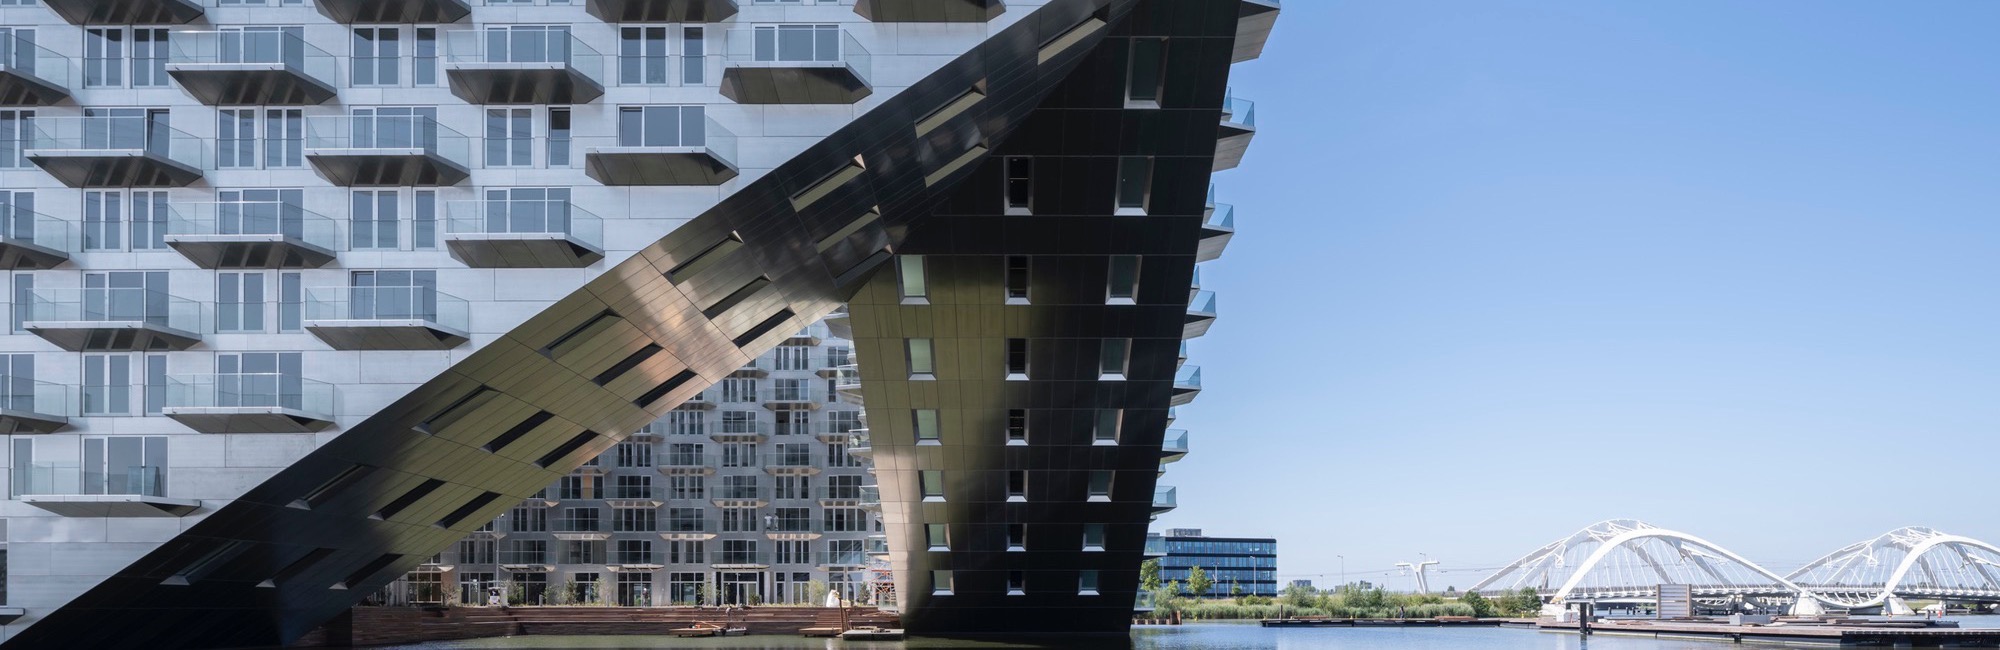 sluishuis-residential-building-big-plus-barcode-architects_9-1